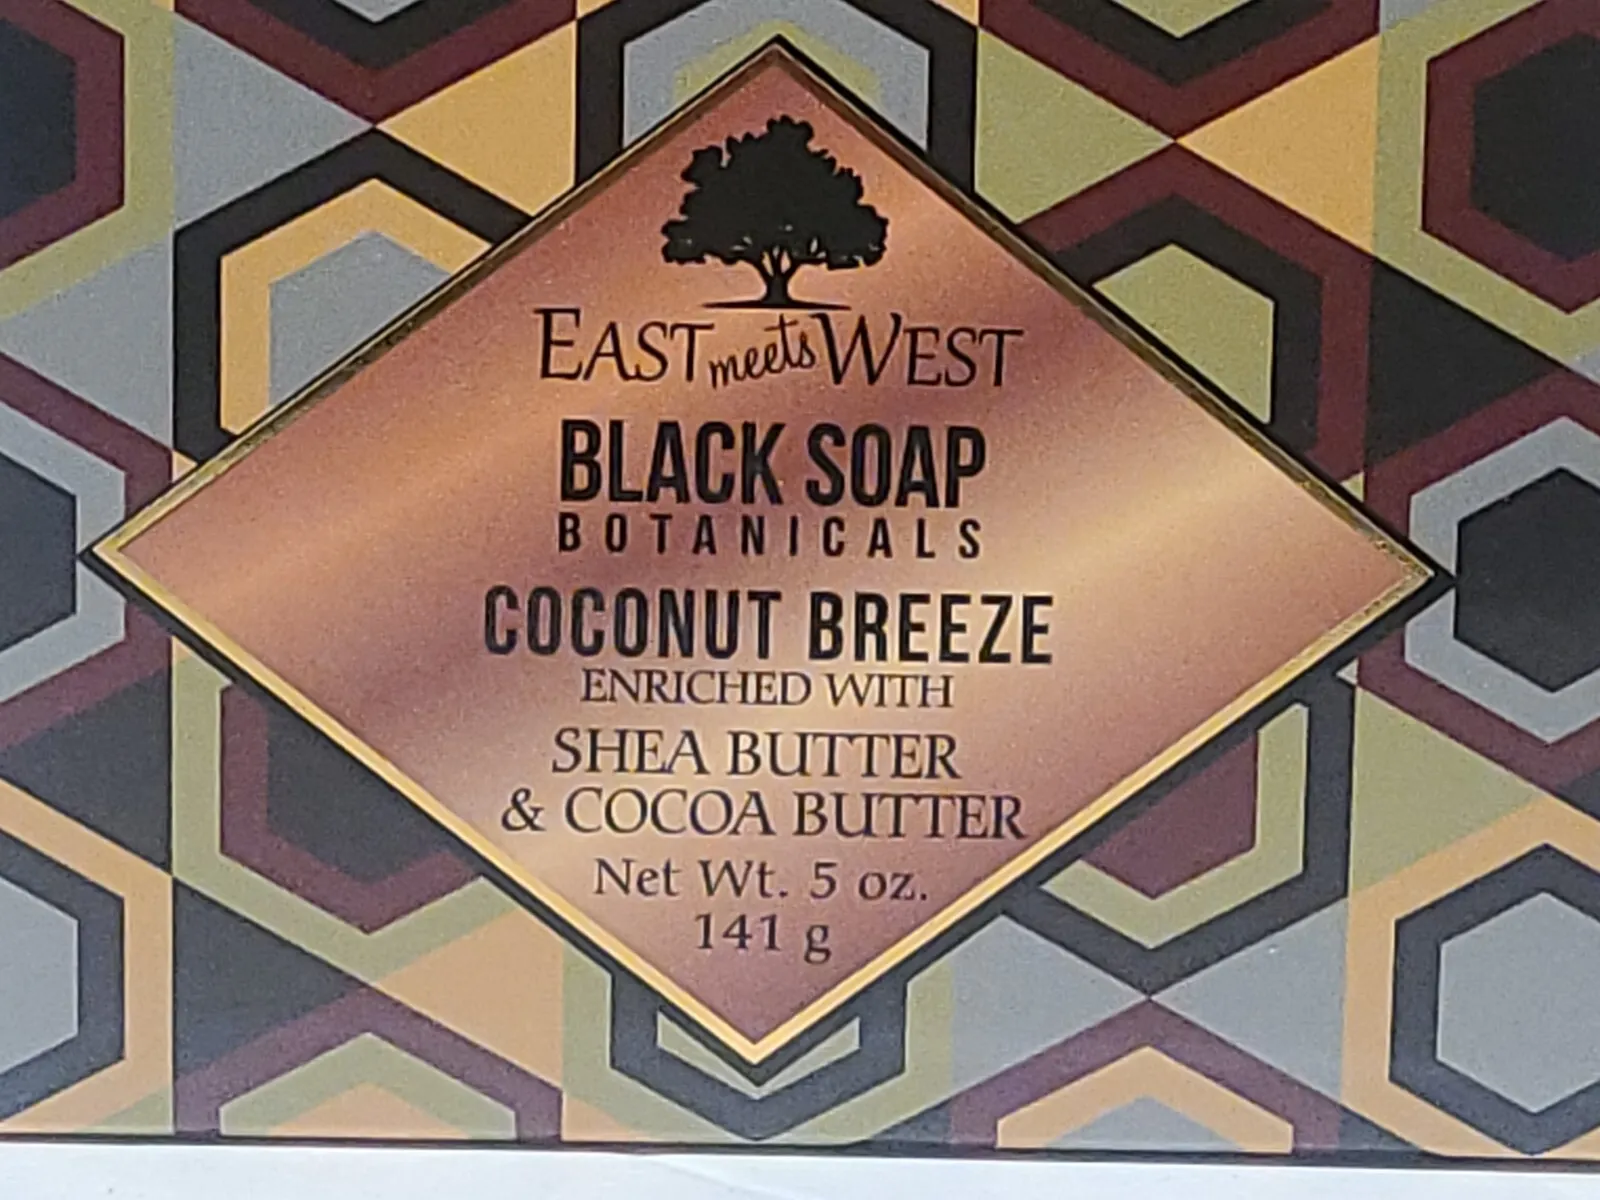 East Meets West Black Soap Botanicals Coconut Breeze Shea Butter & Cocoa Butter